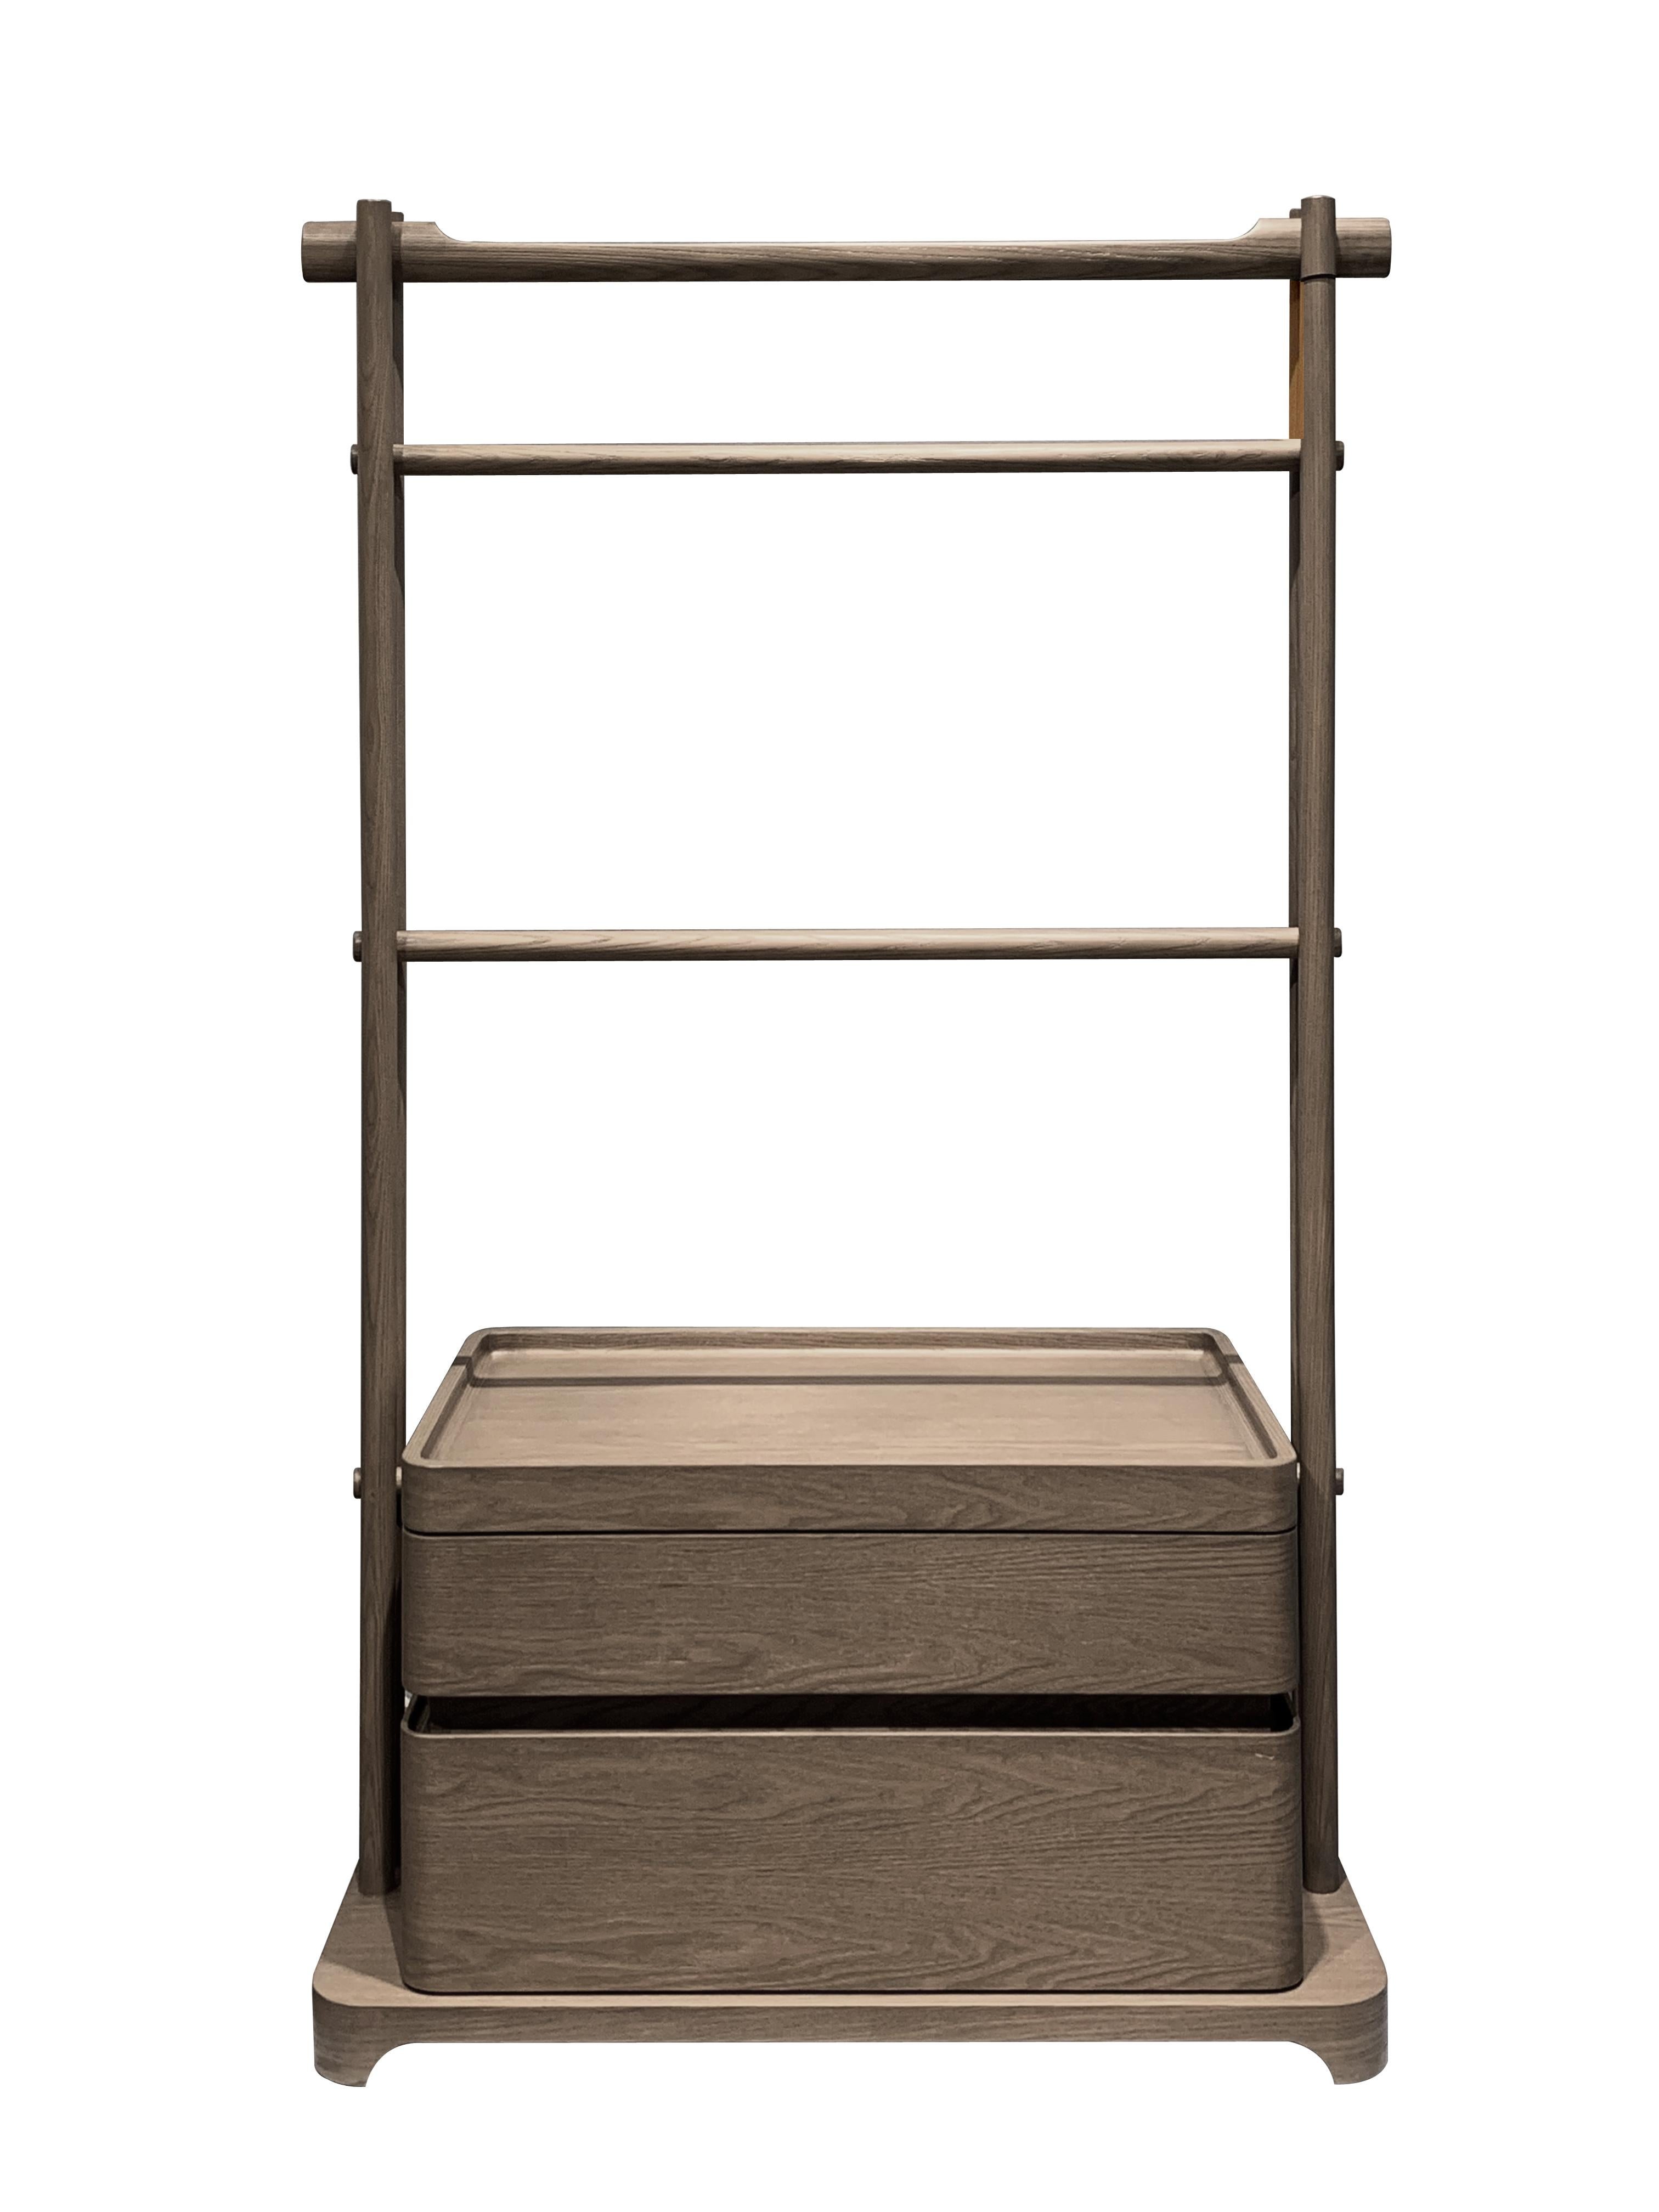 Veneer Low Scarf Stand Interlock André Fu Living Grey Oak Modern Cabinet New For Sale